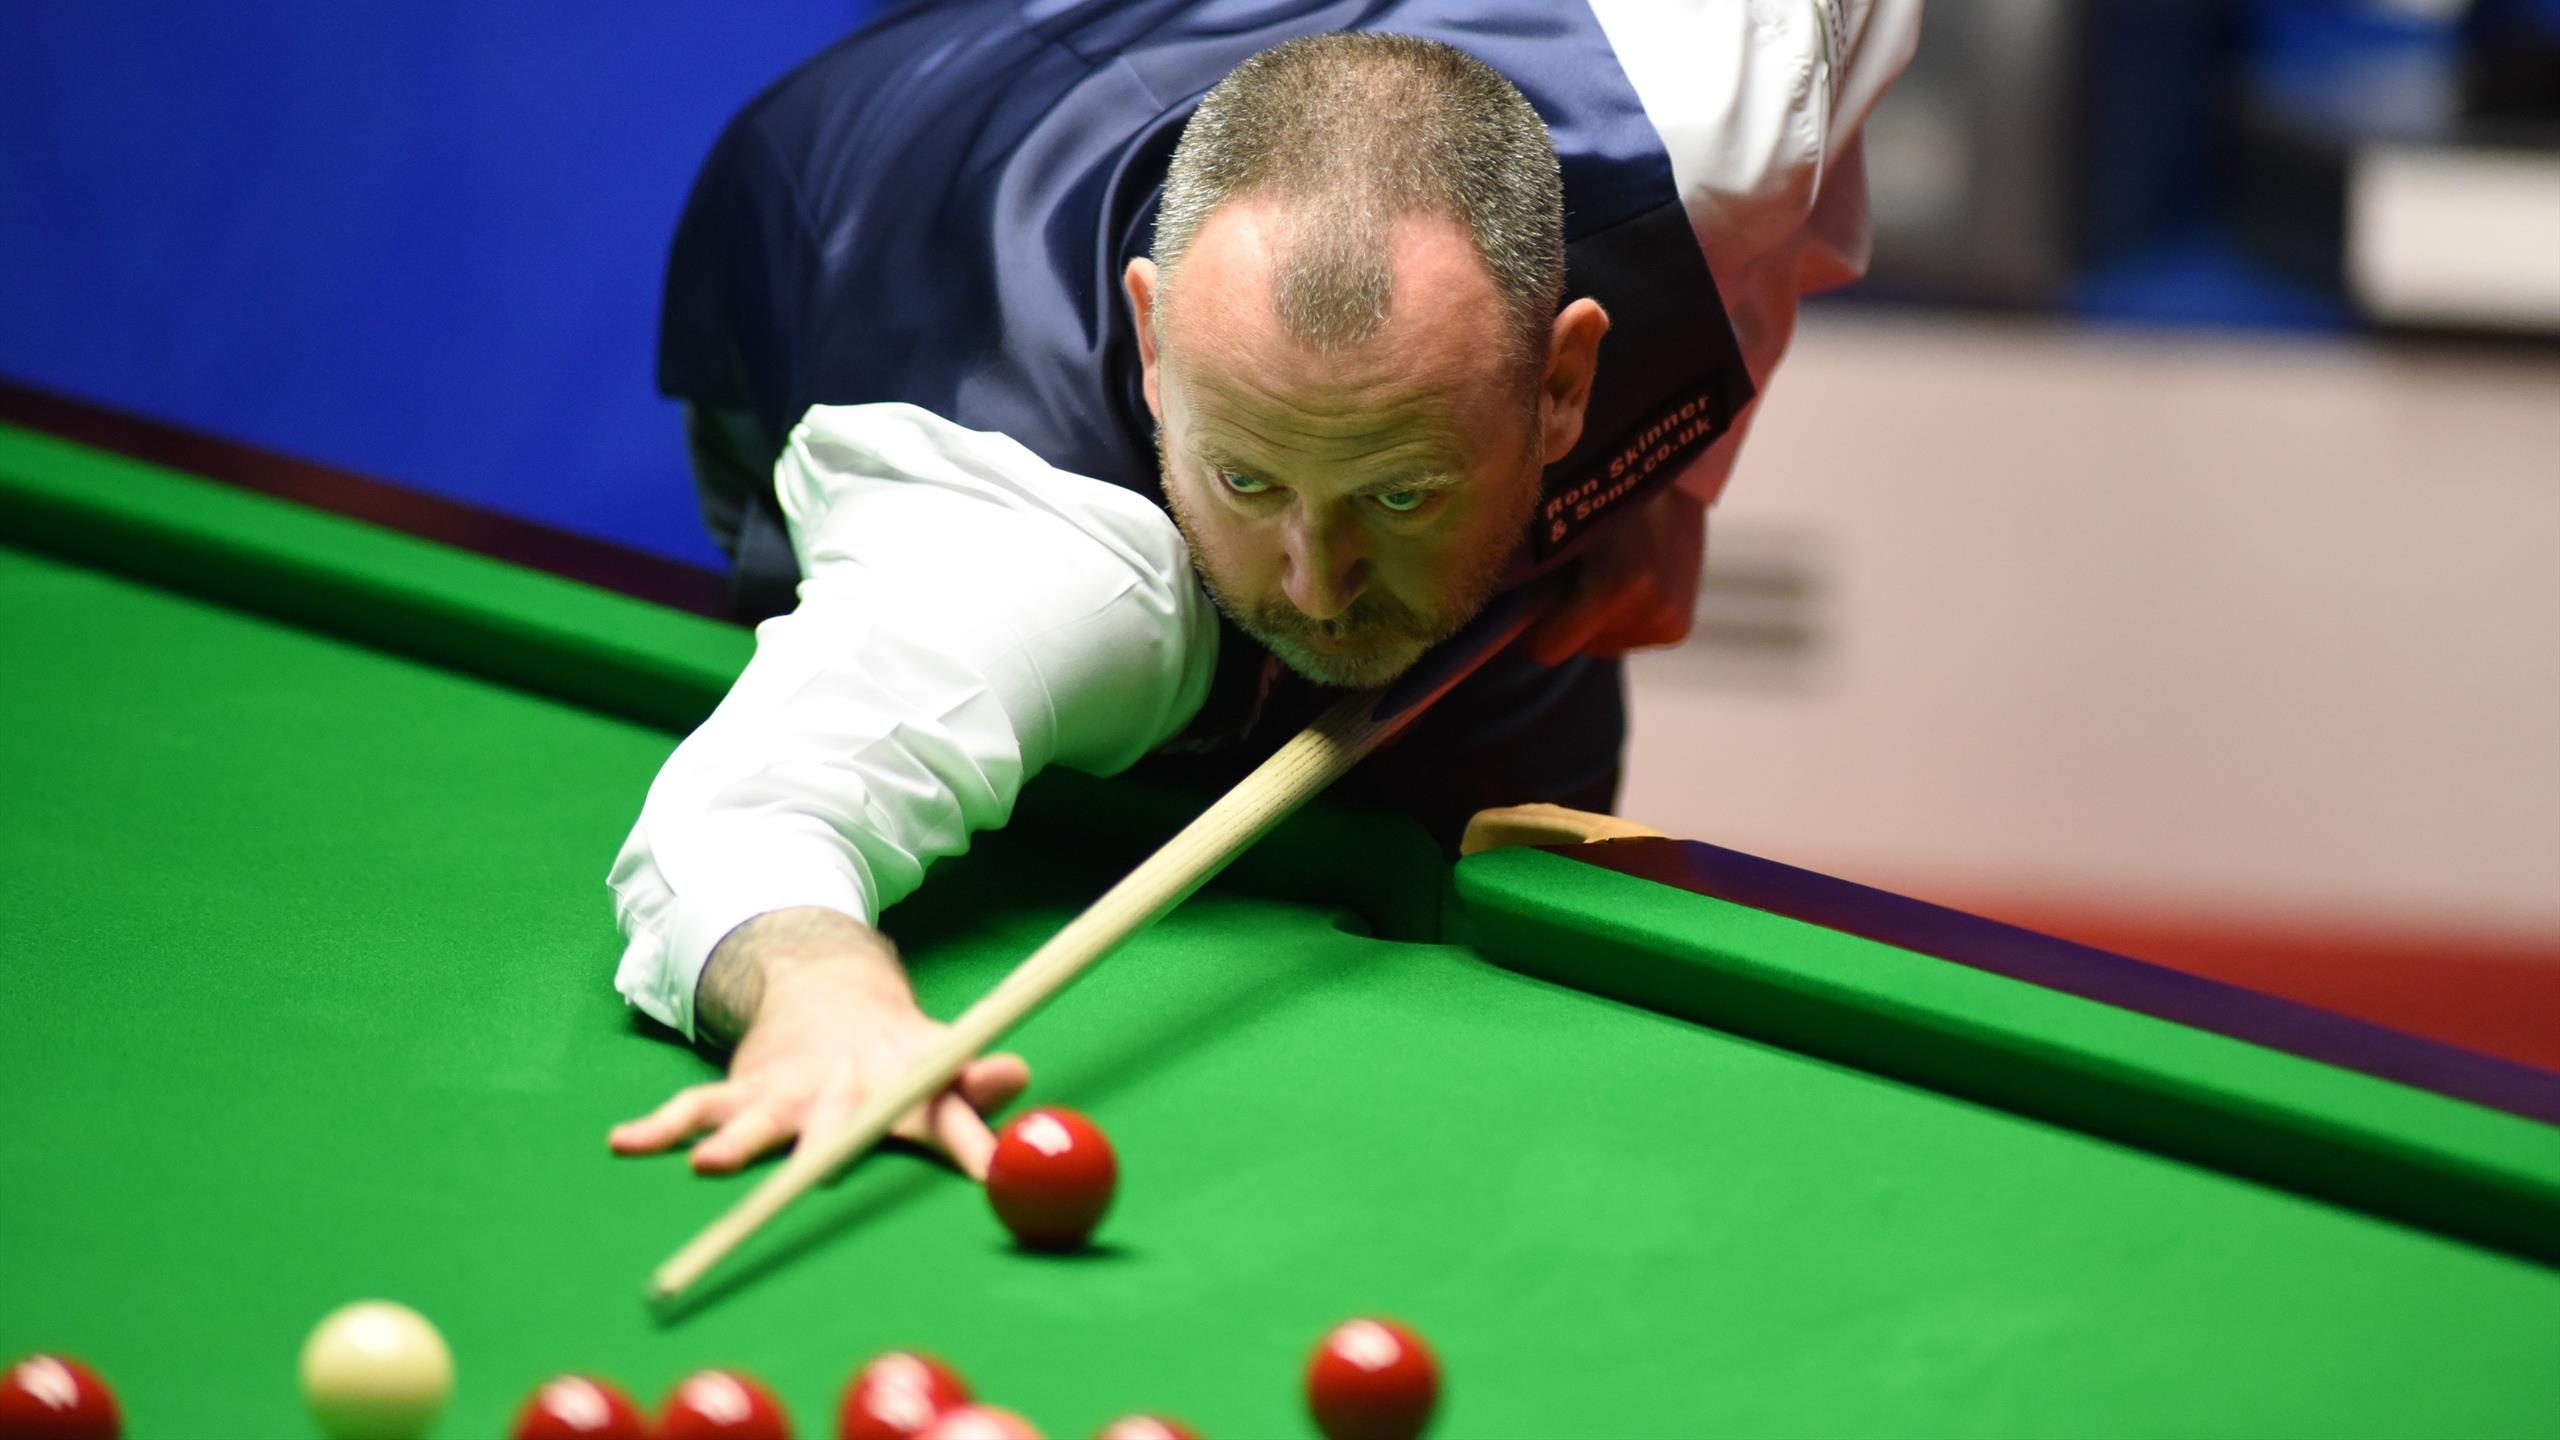 Snooker: Mark Williams, The Welsh Potting Machine, The Six-red World Championship winner. 2560x1440 HD Wallpaper.